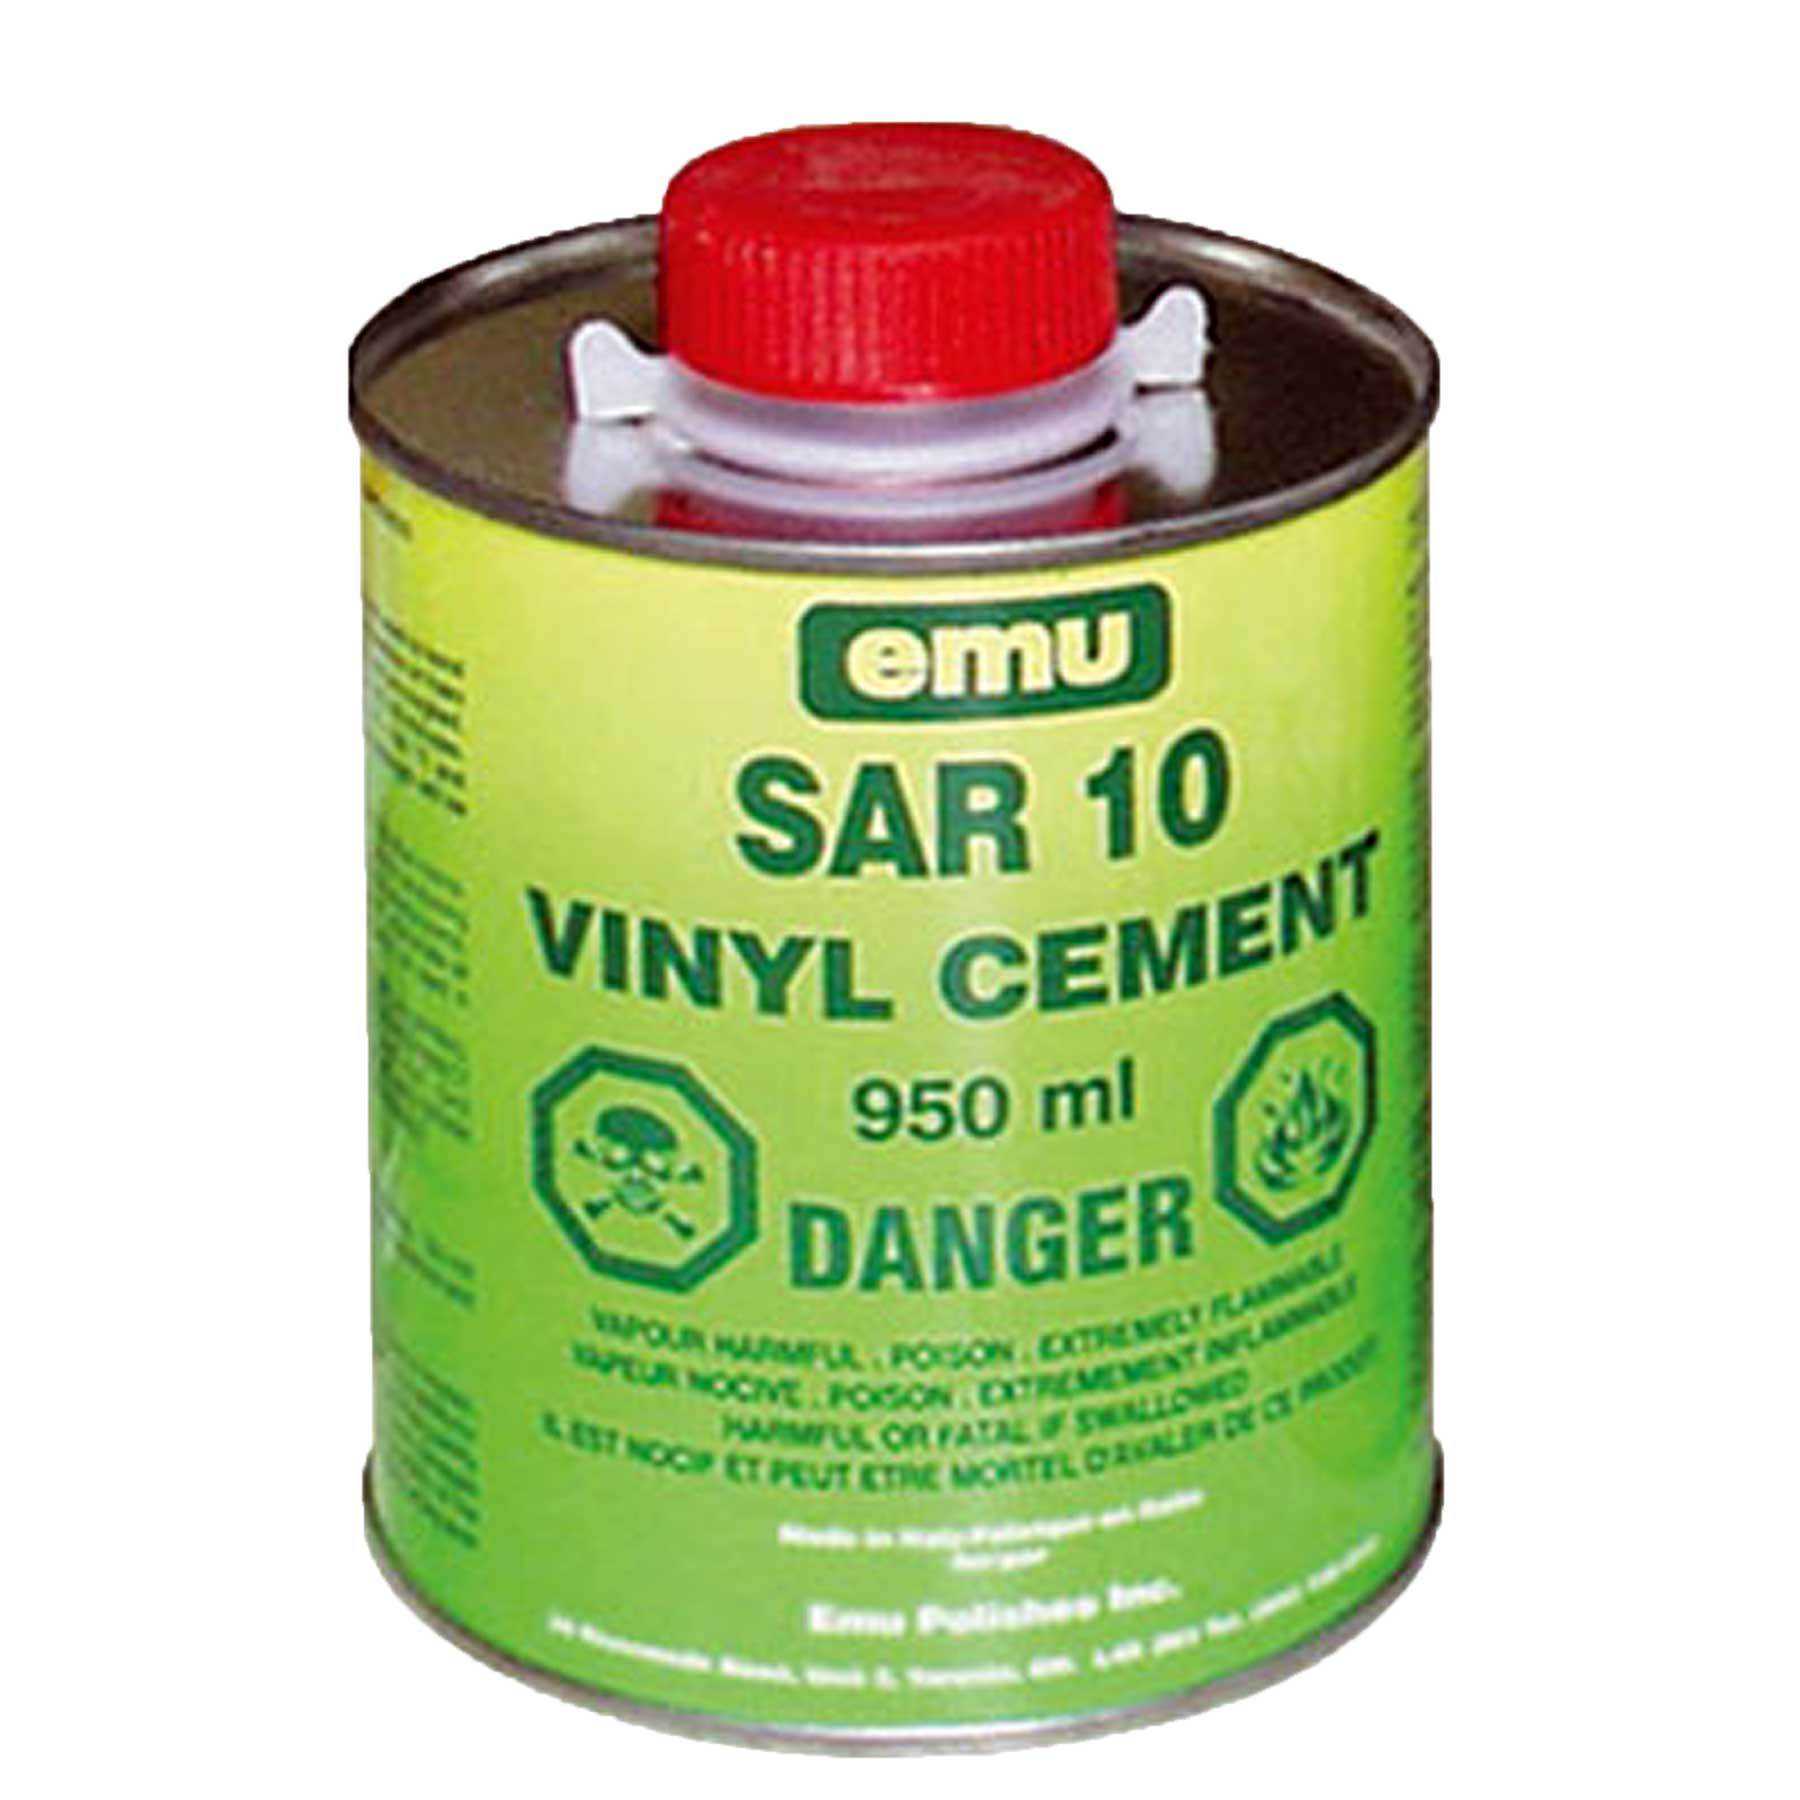 Sar 10 Vinyl Cement 950Ml